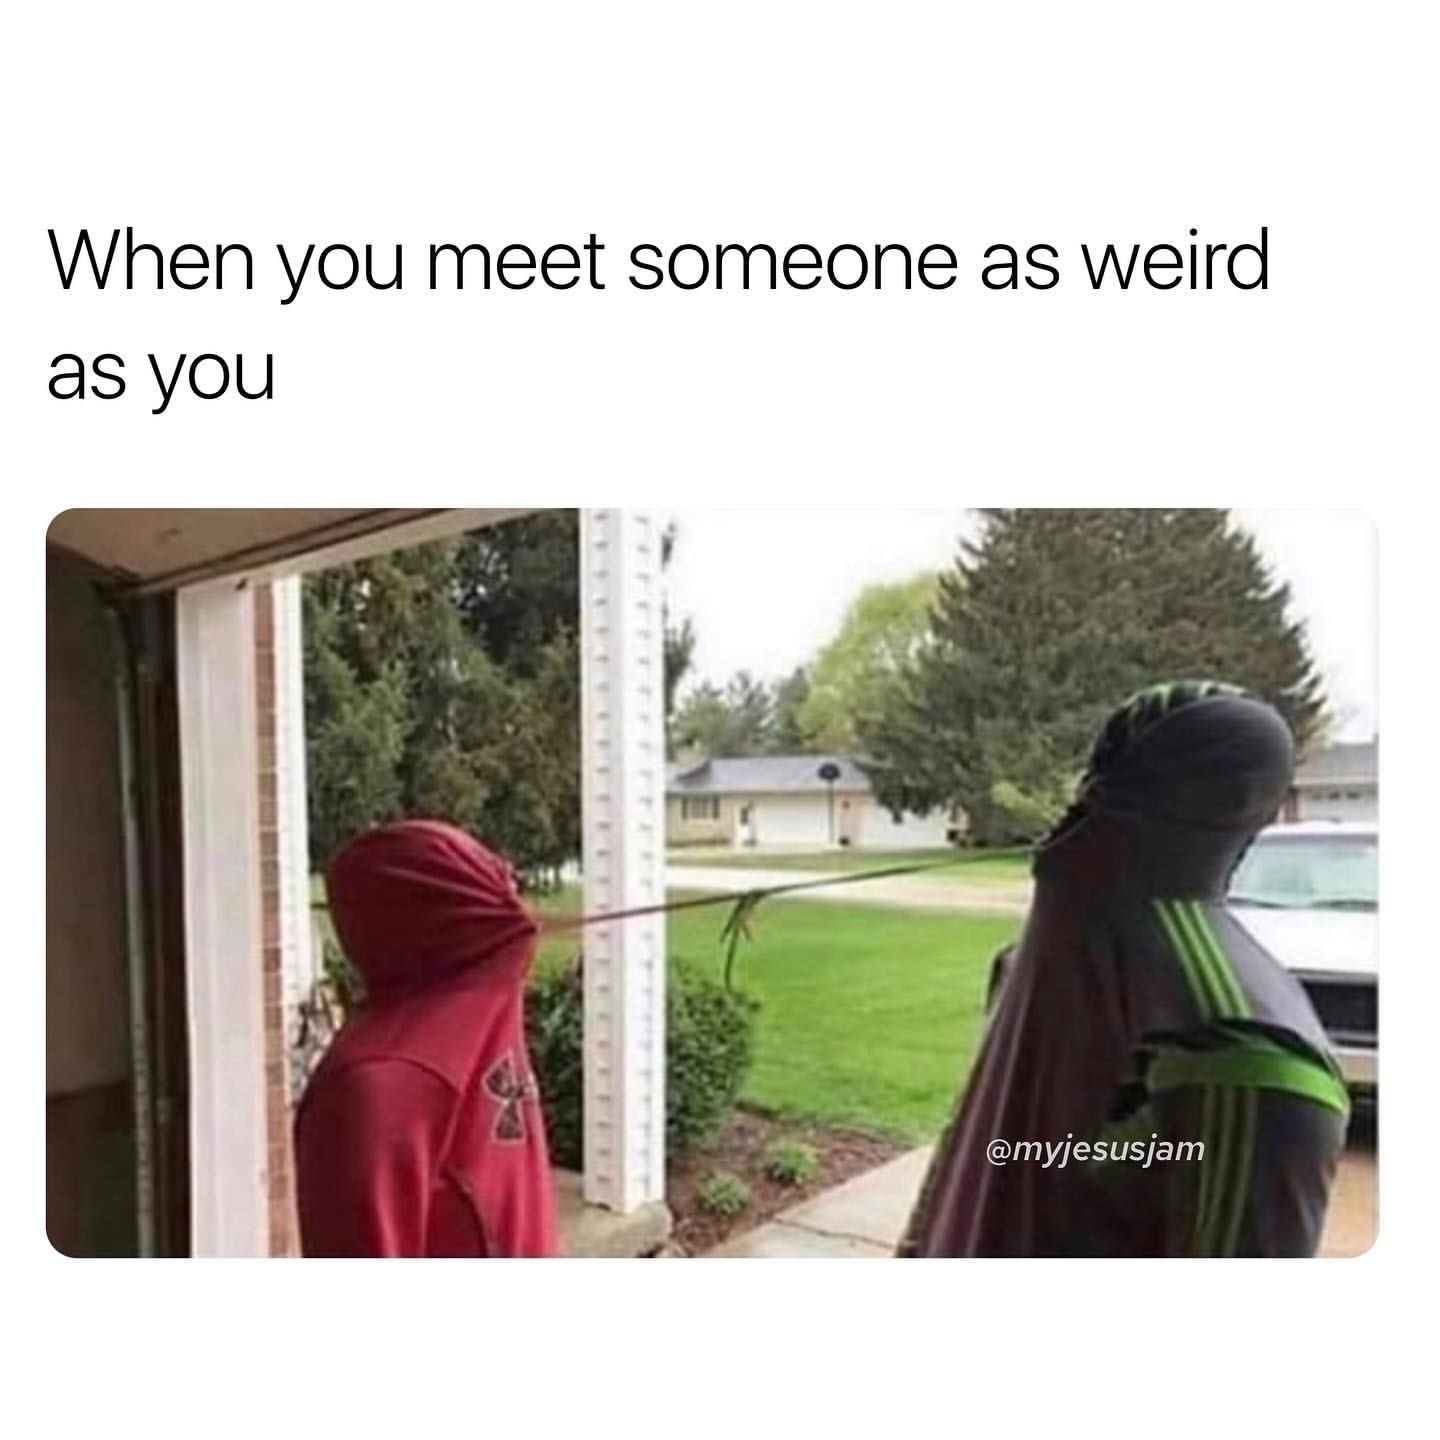 When you meet someone as weird as you.